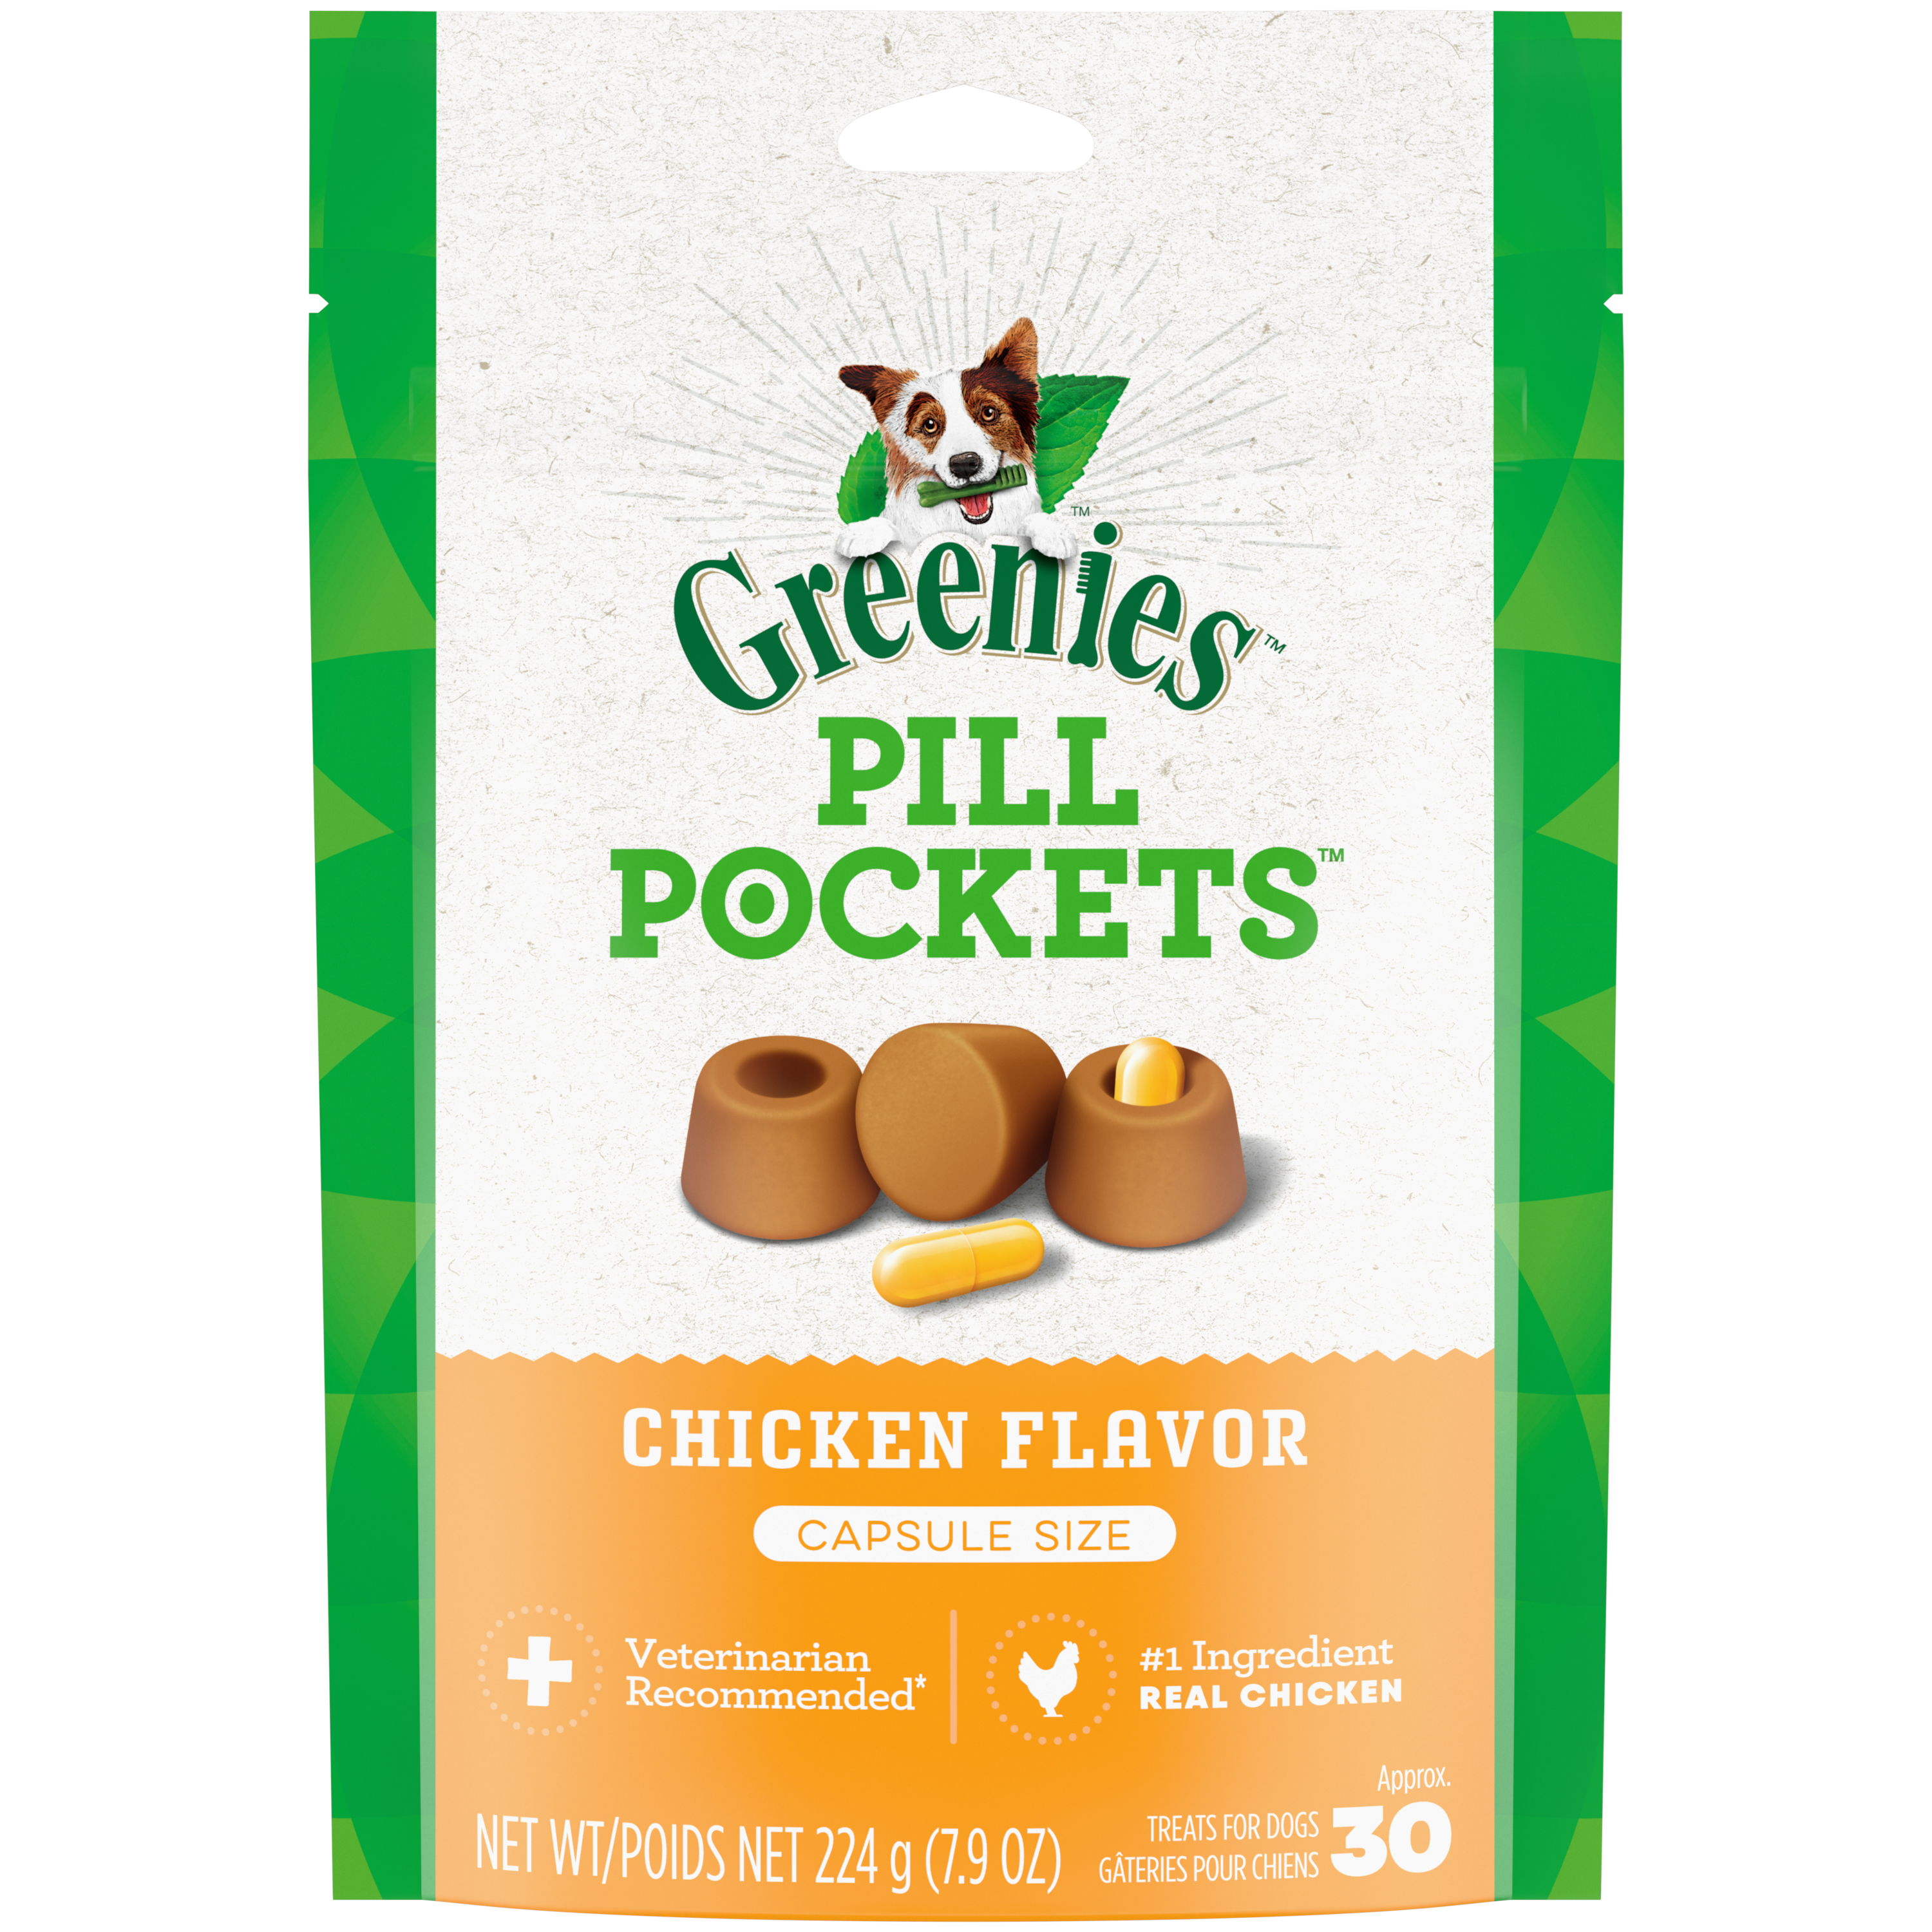 7.9 oz. Greenies Pill Pocket Chicken Capsule Pill Pocket - Health/First Aid